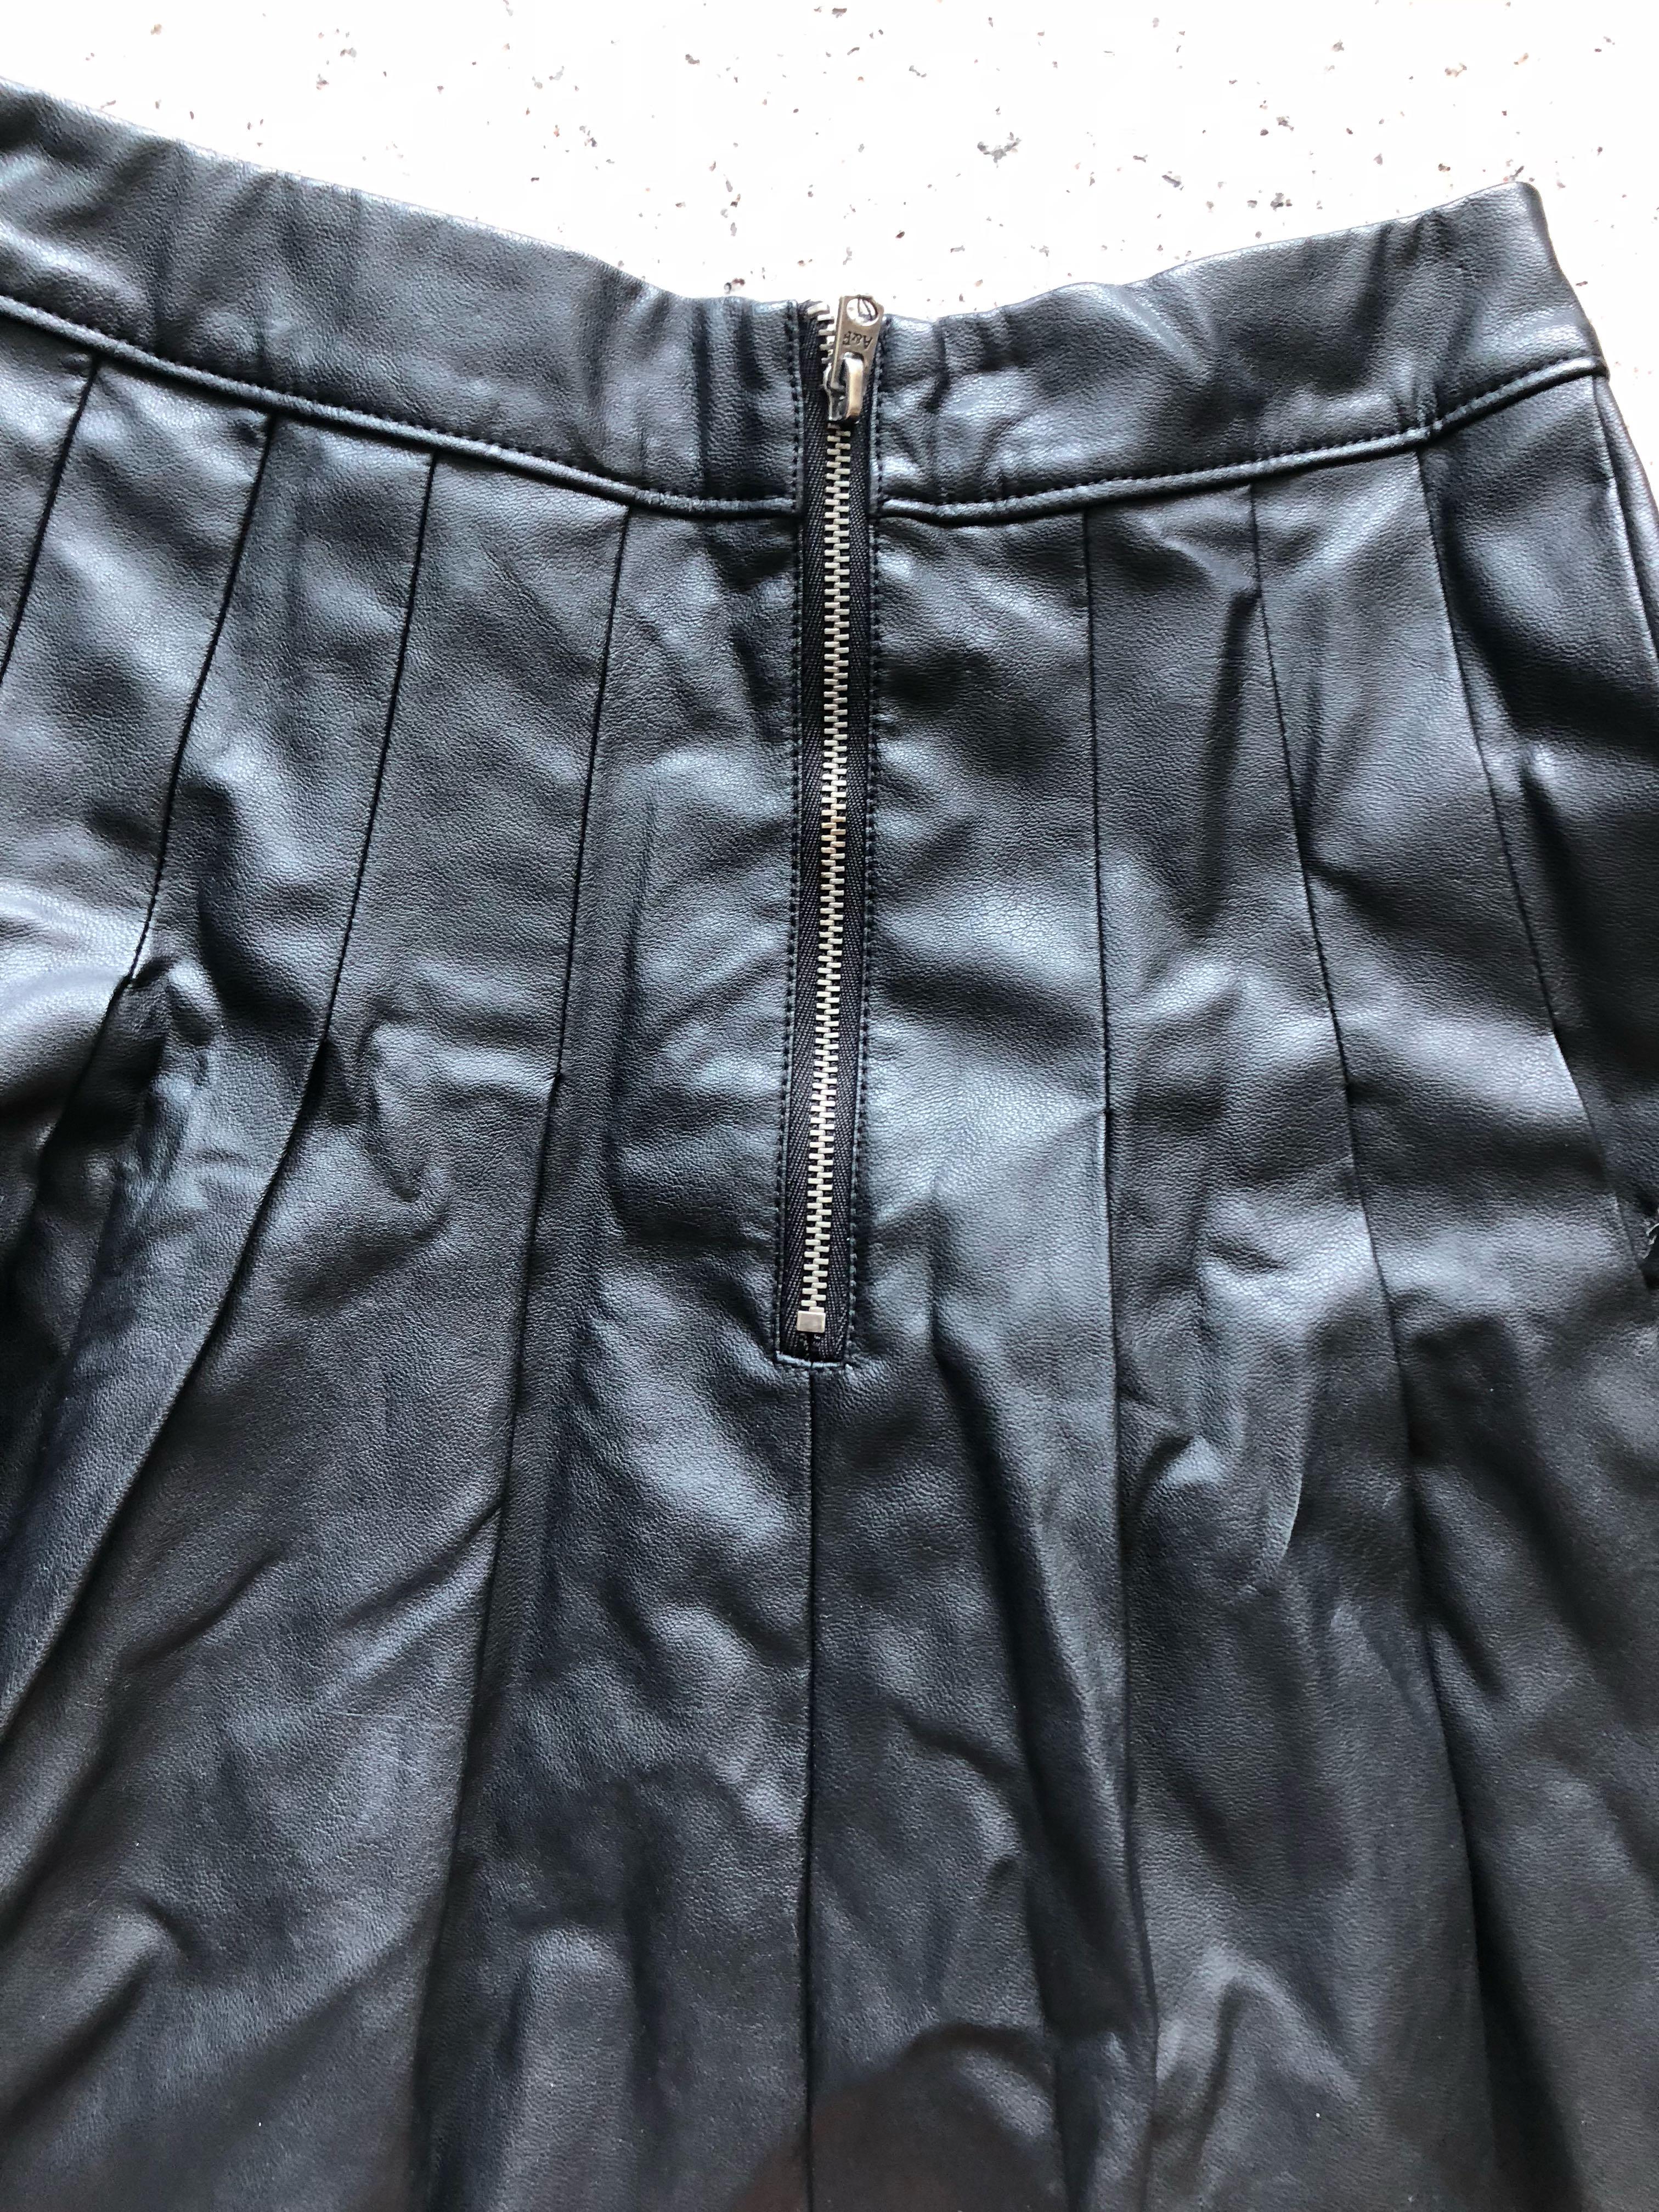 abercrombie leather skirt